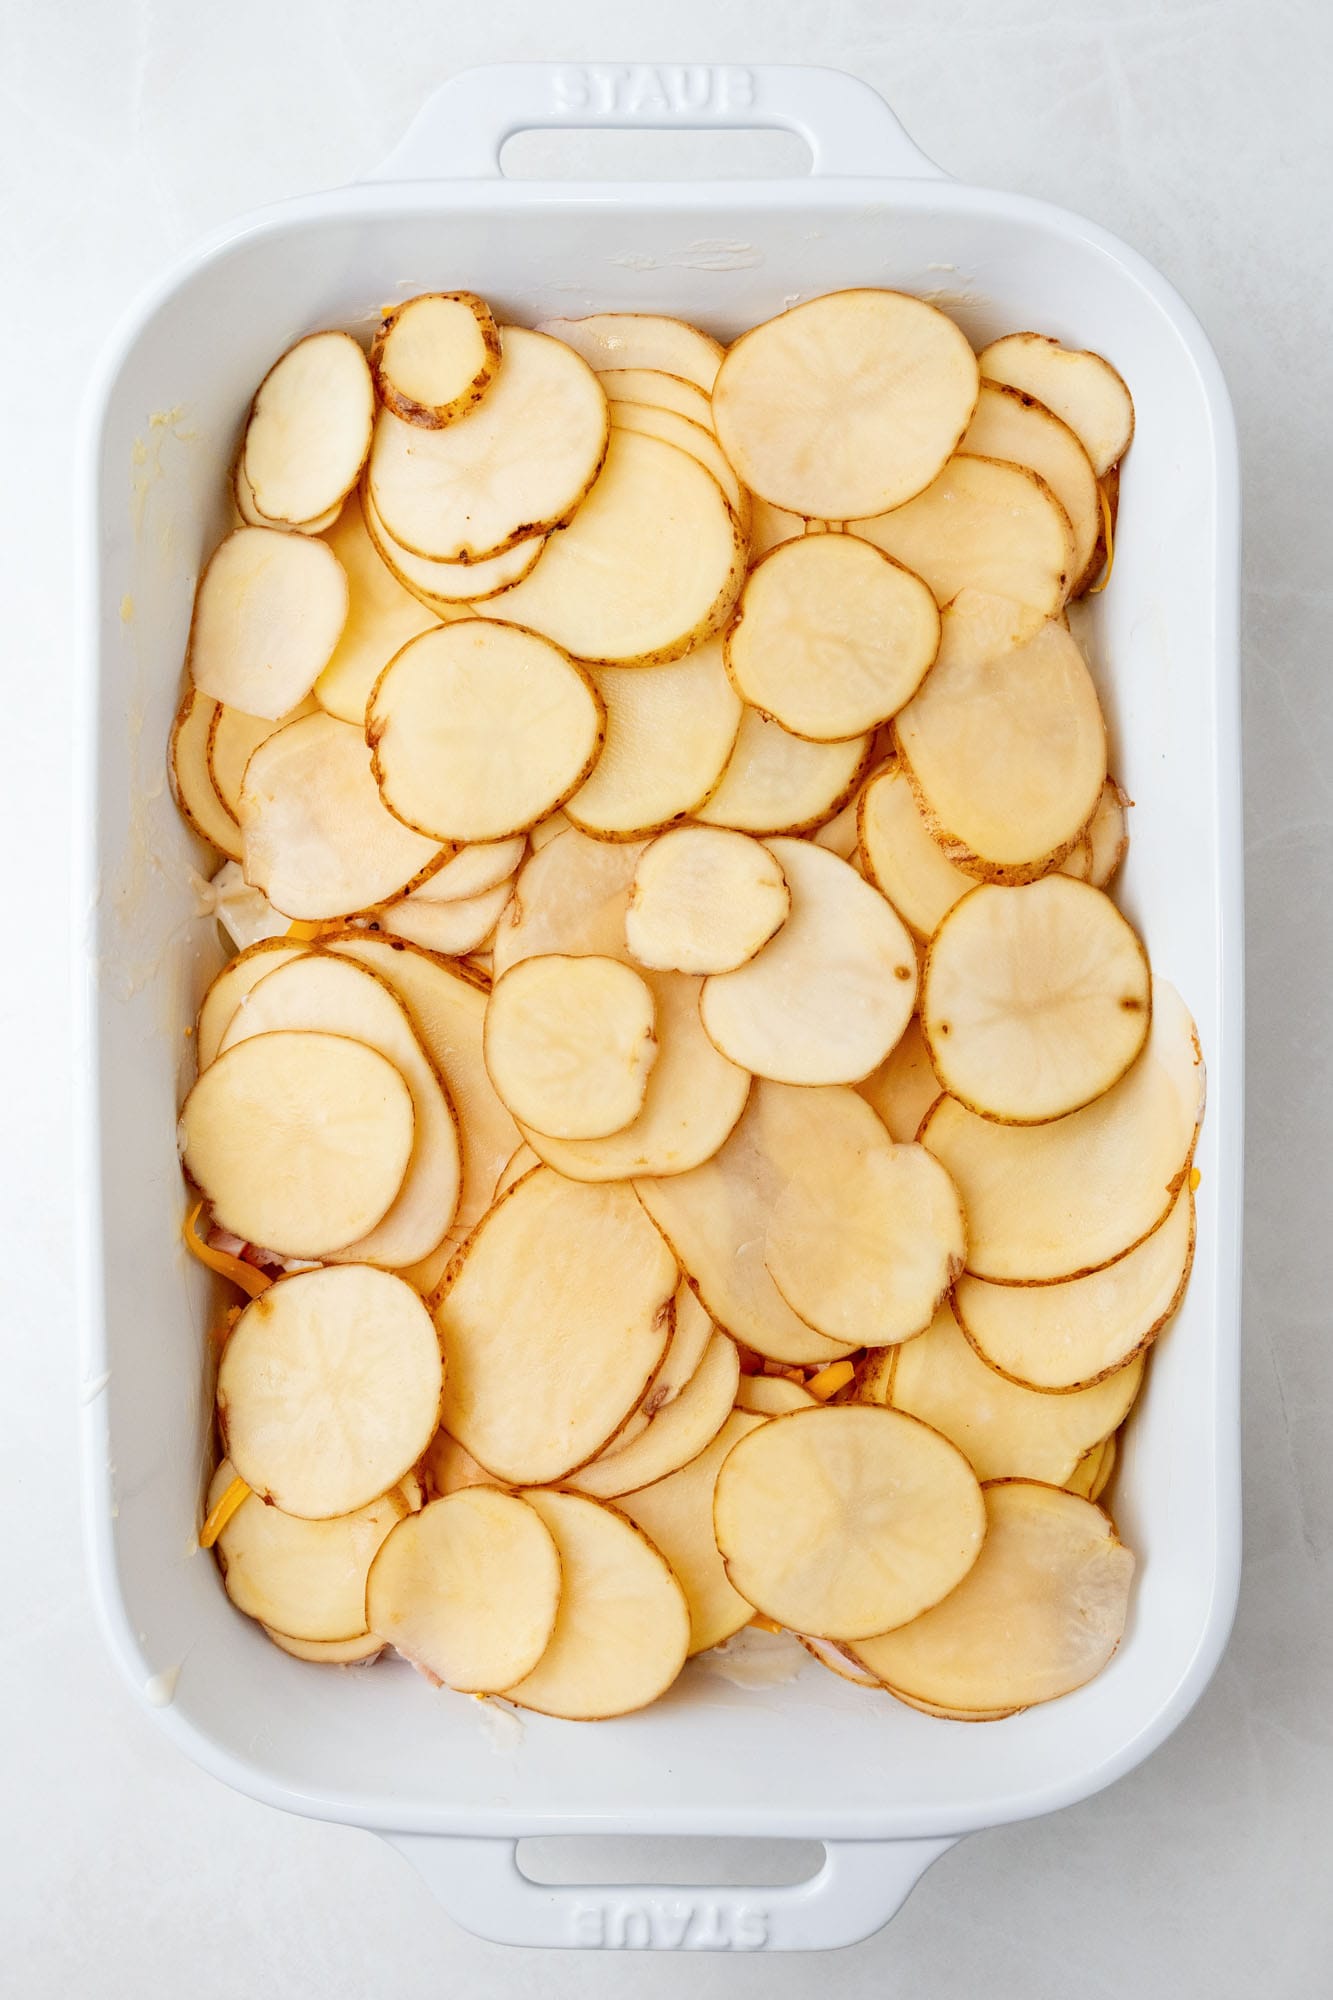 sliced potatoes in a casserole dish.